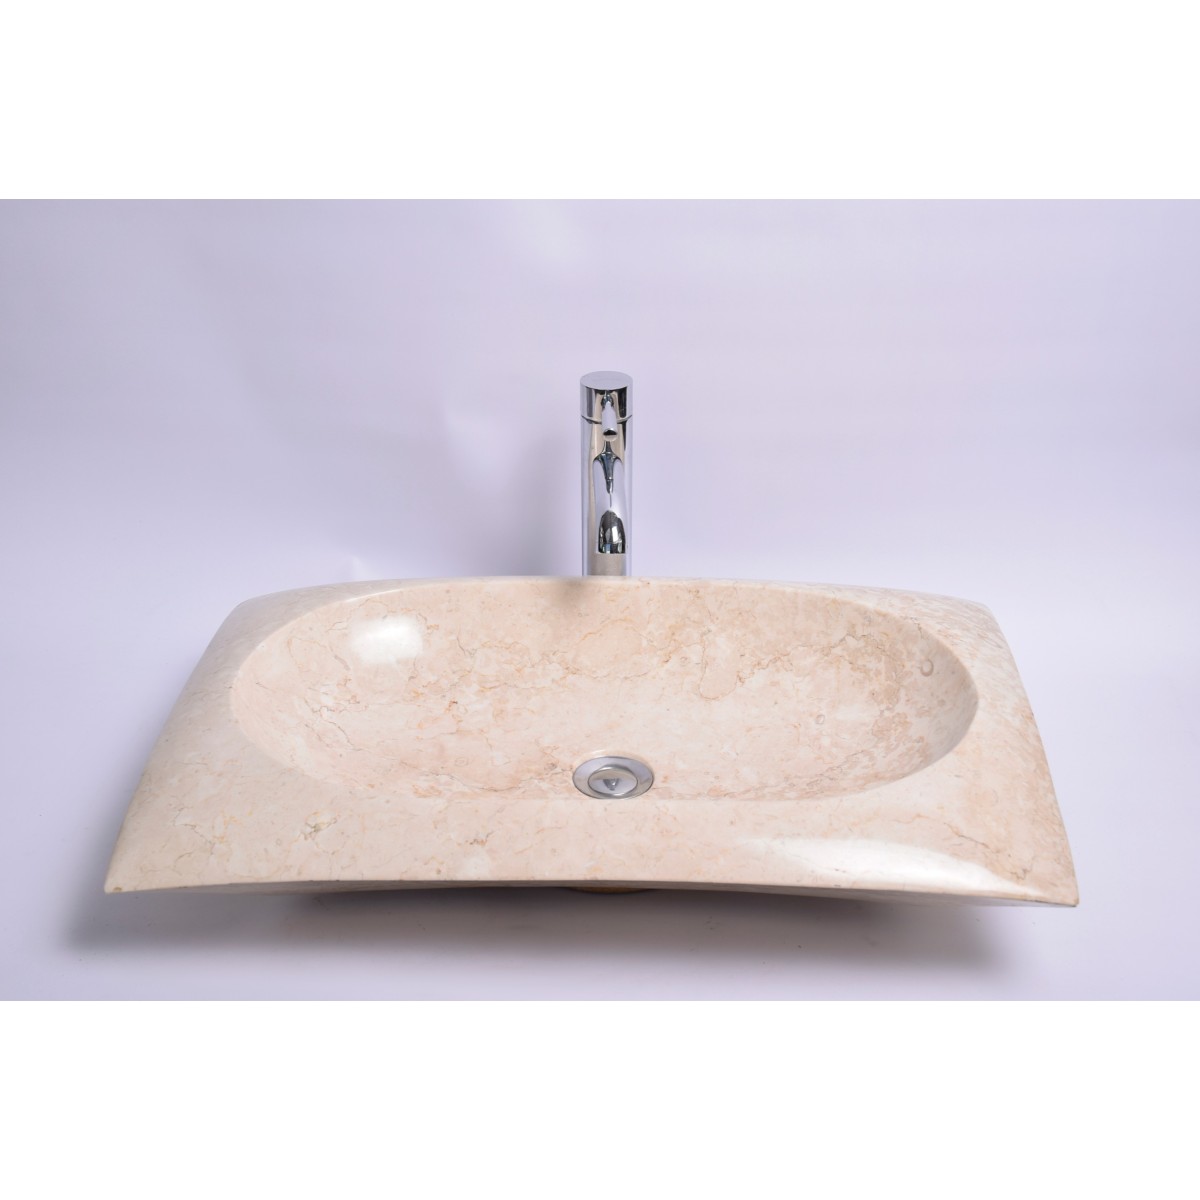 RCTK-P Cream F 60x40x12 cm  wash basin overtop INDUSTONE